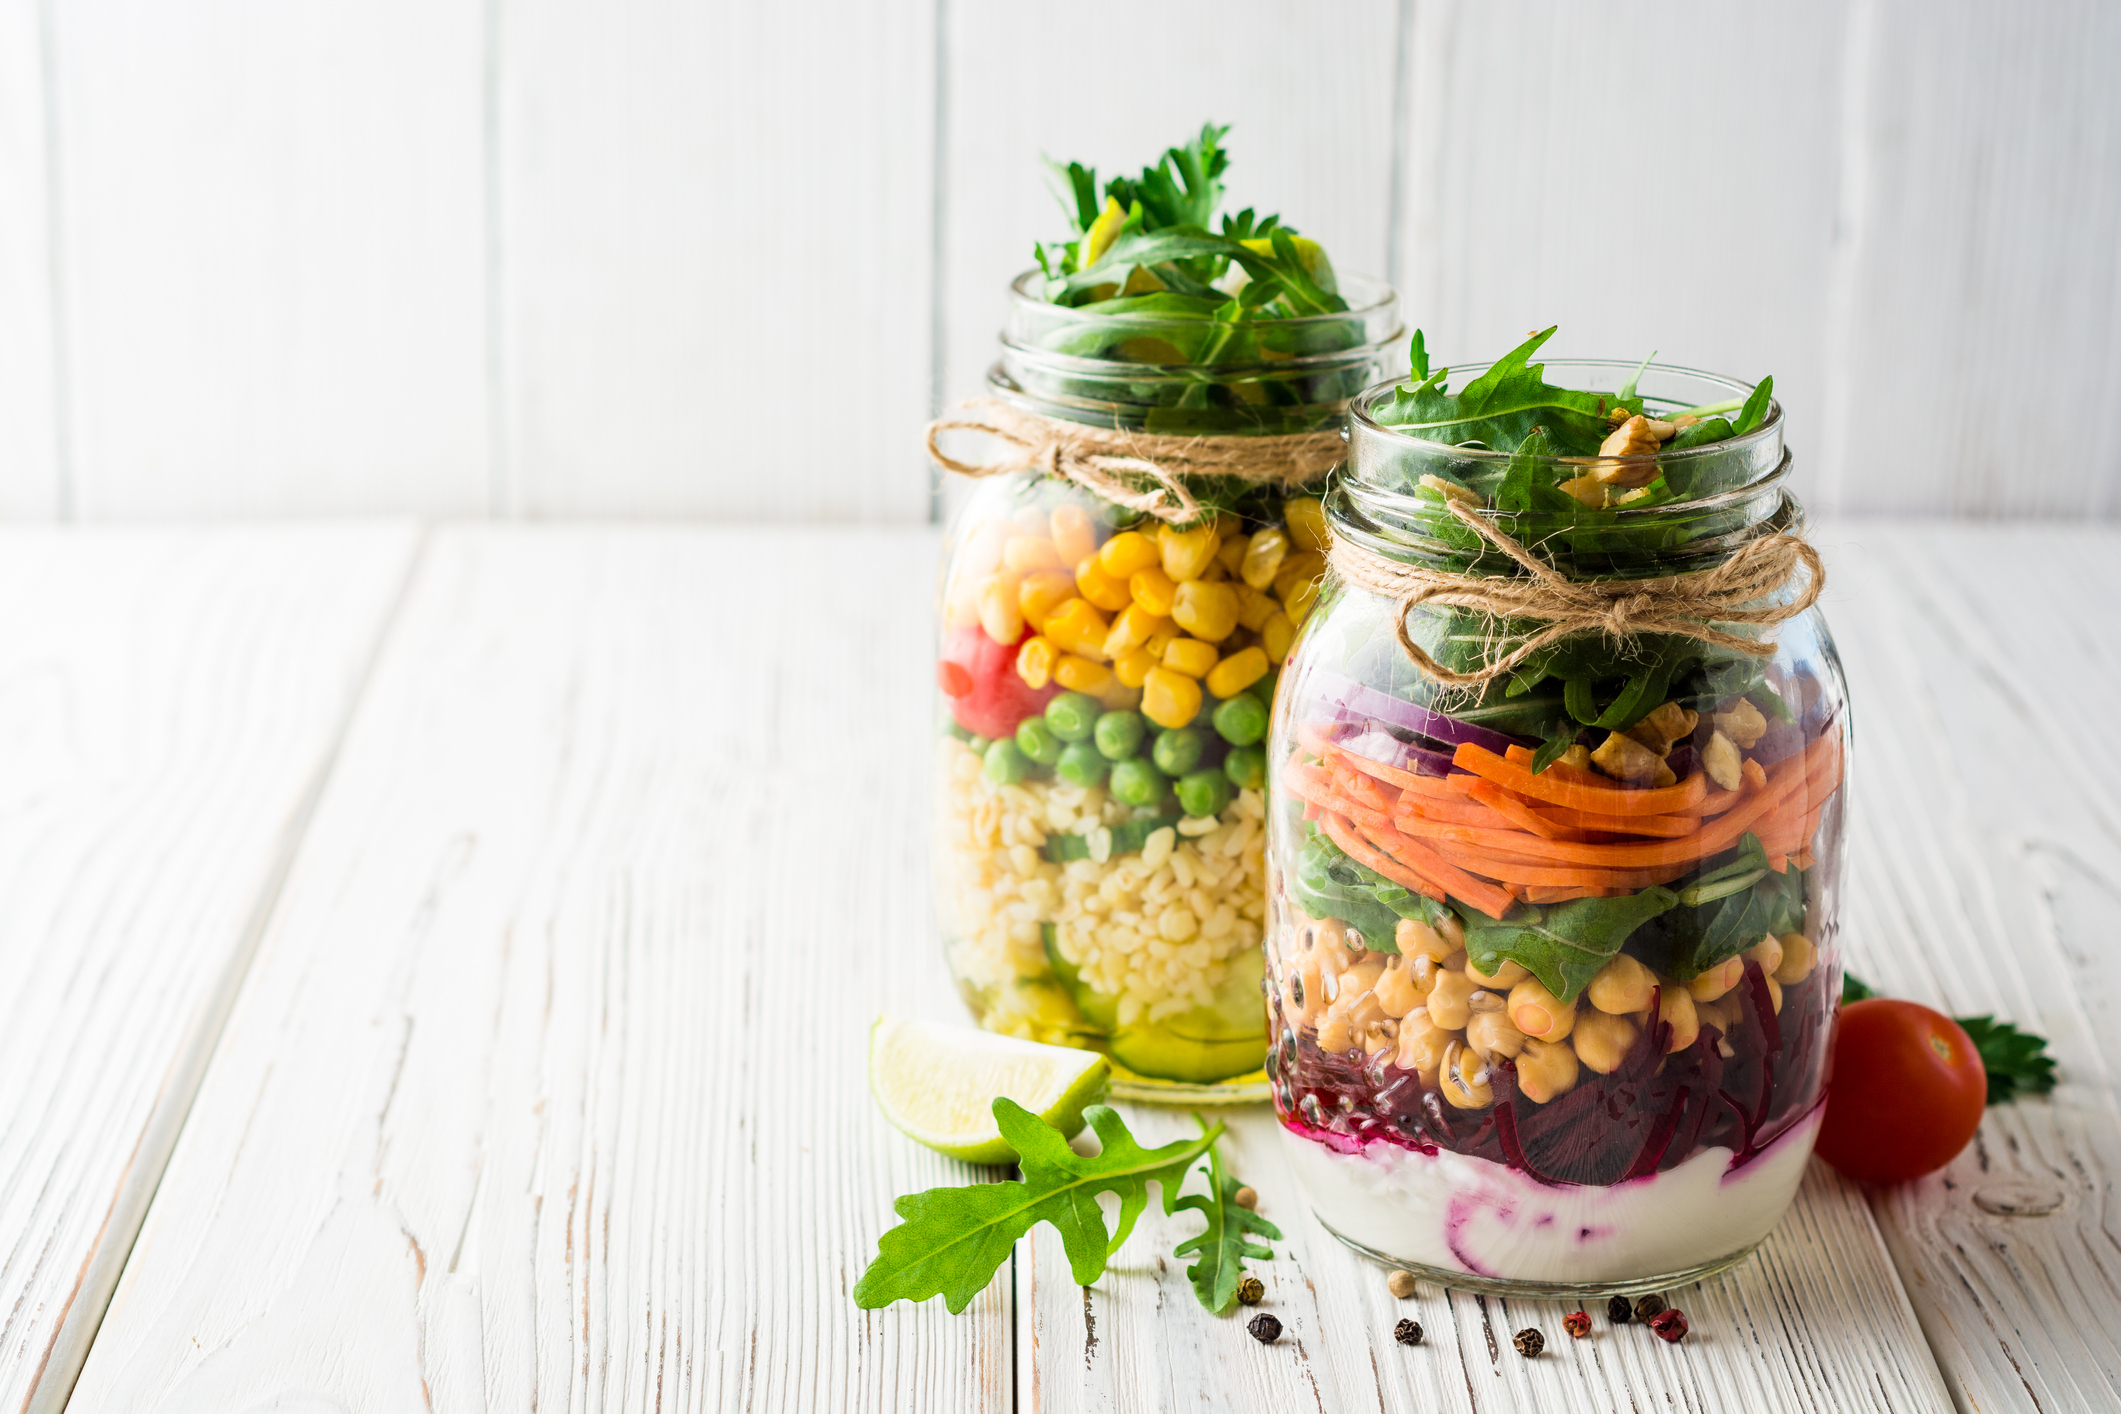 How to Build the Perfect Mason Jar Salad